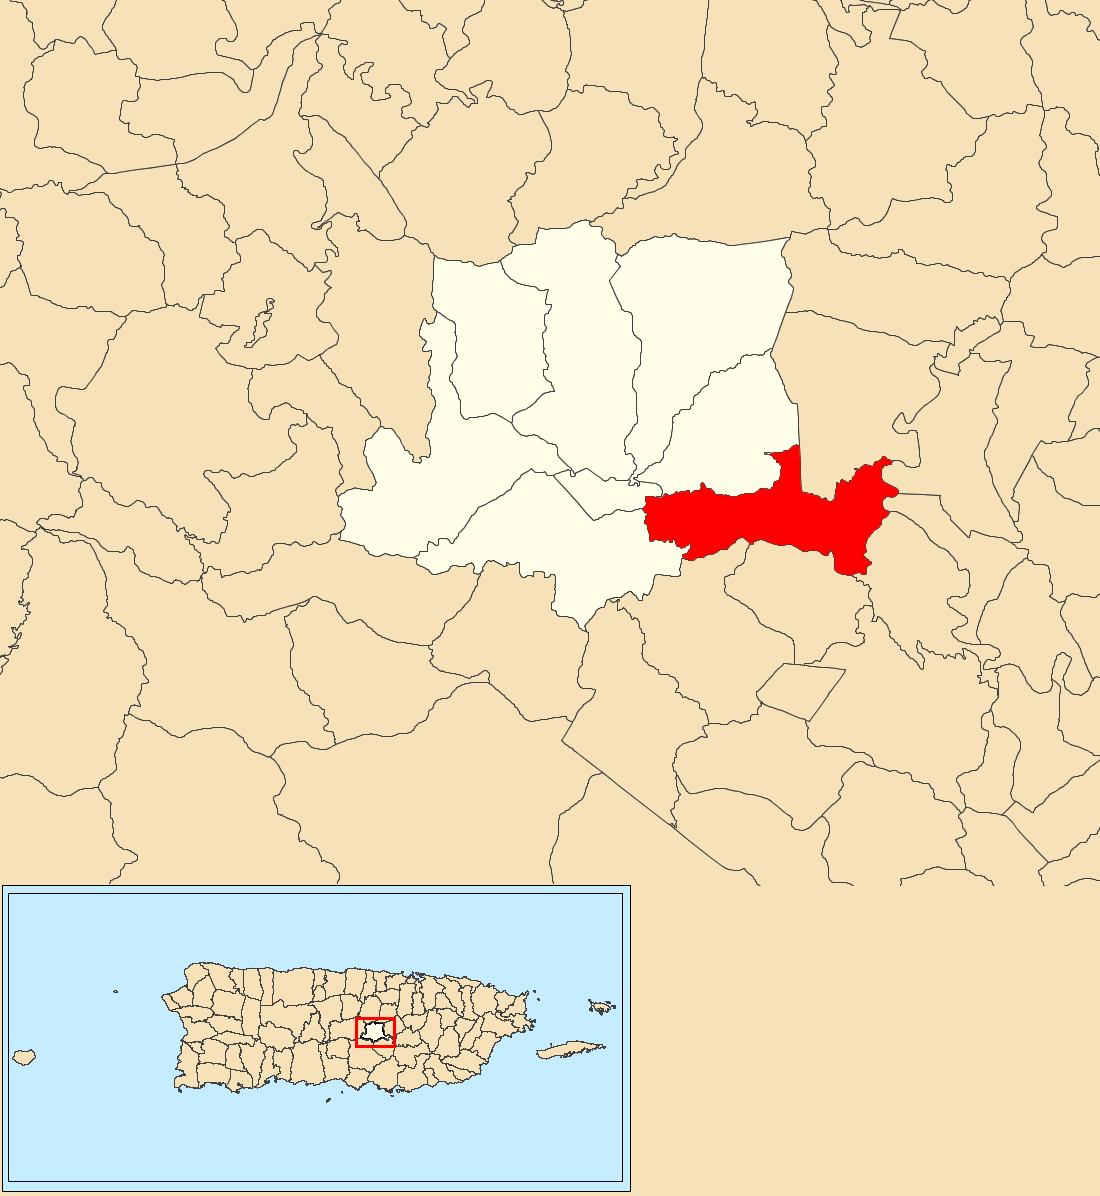 Honduras, Barranquitas, Puerto Rico - Wikipedia